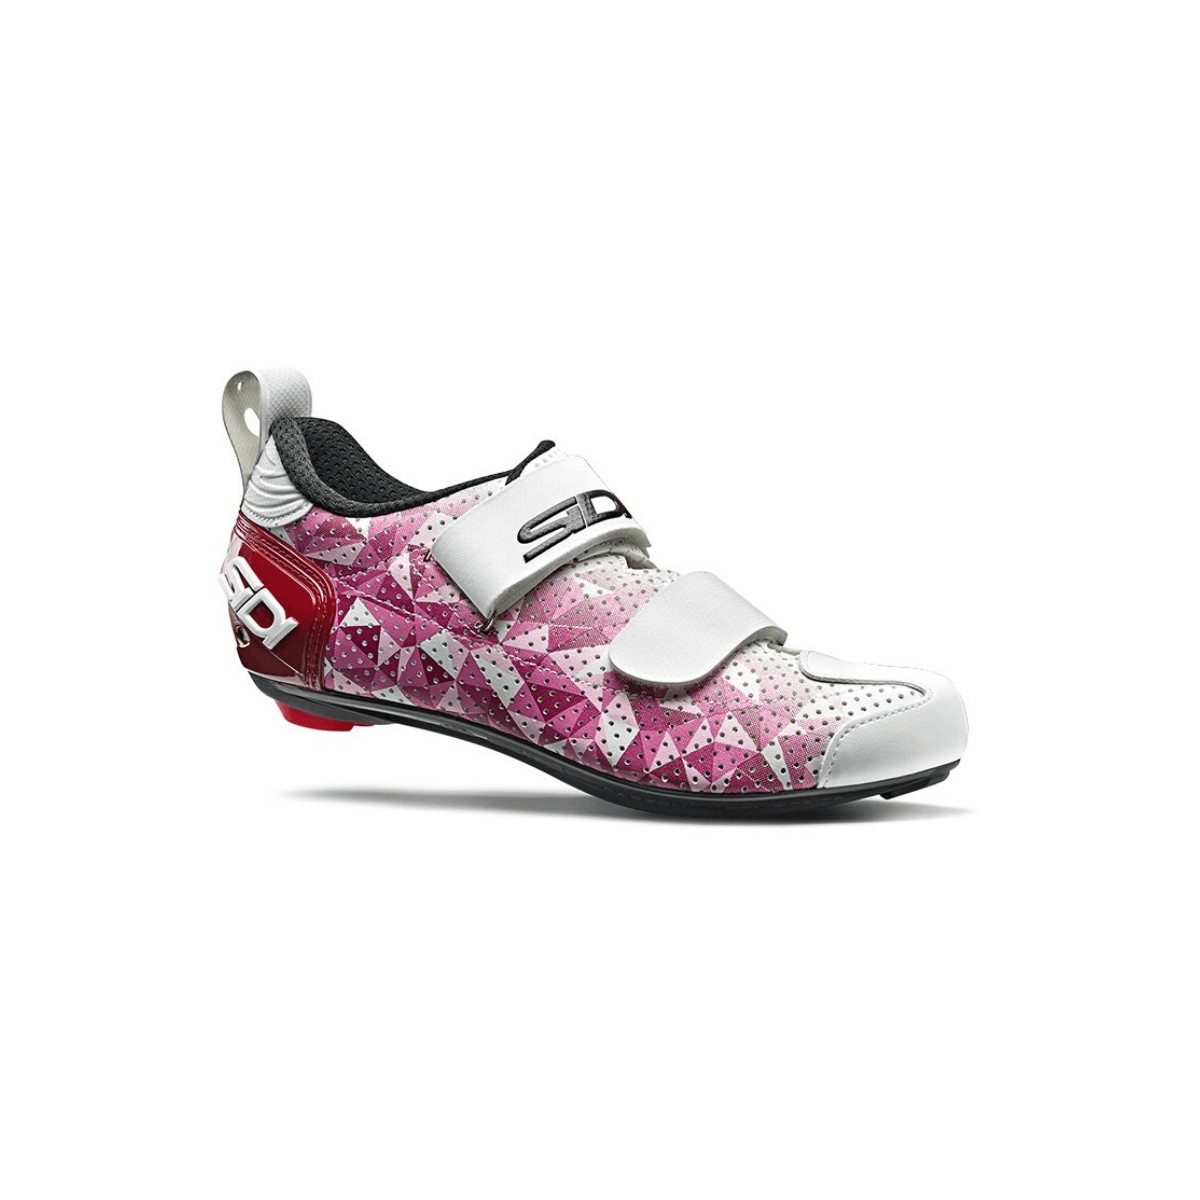 Sidi T5 Air Carbon Pink White Woman Triathlon Shoes, Size 40 - EUR